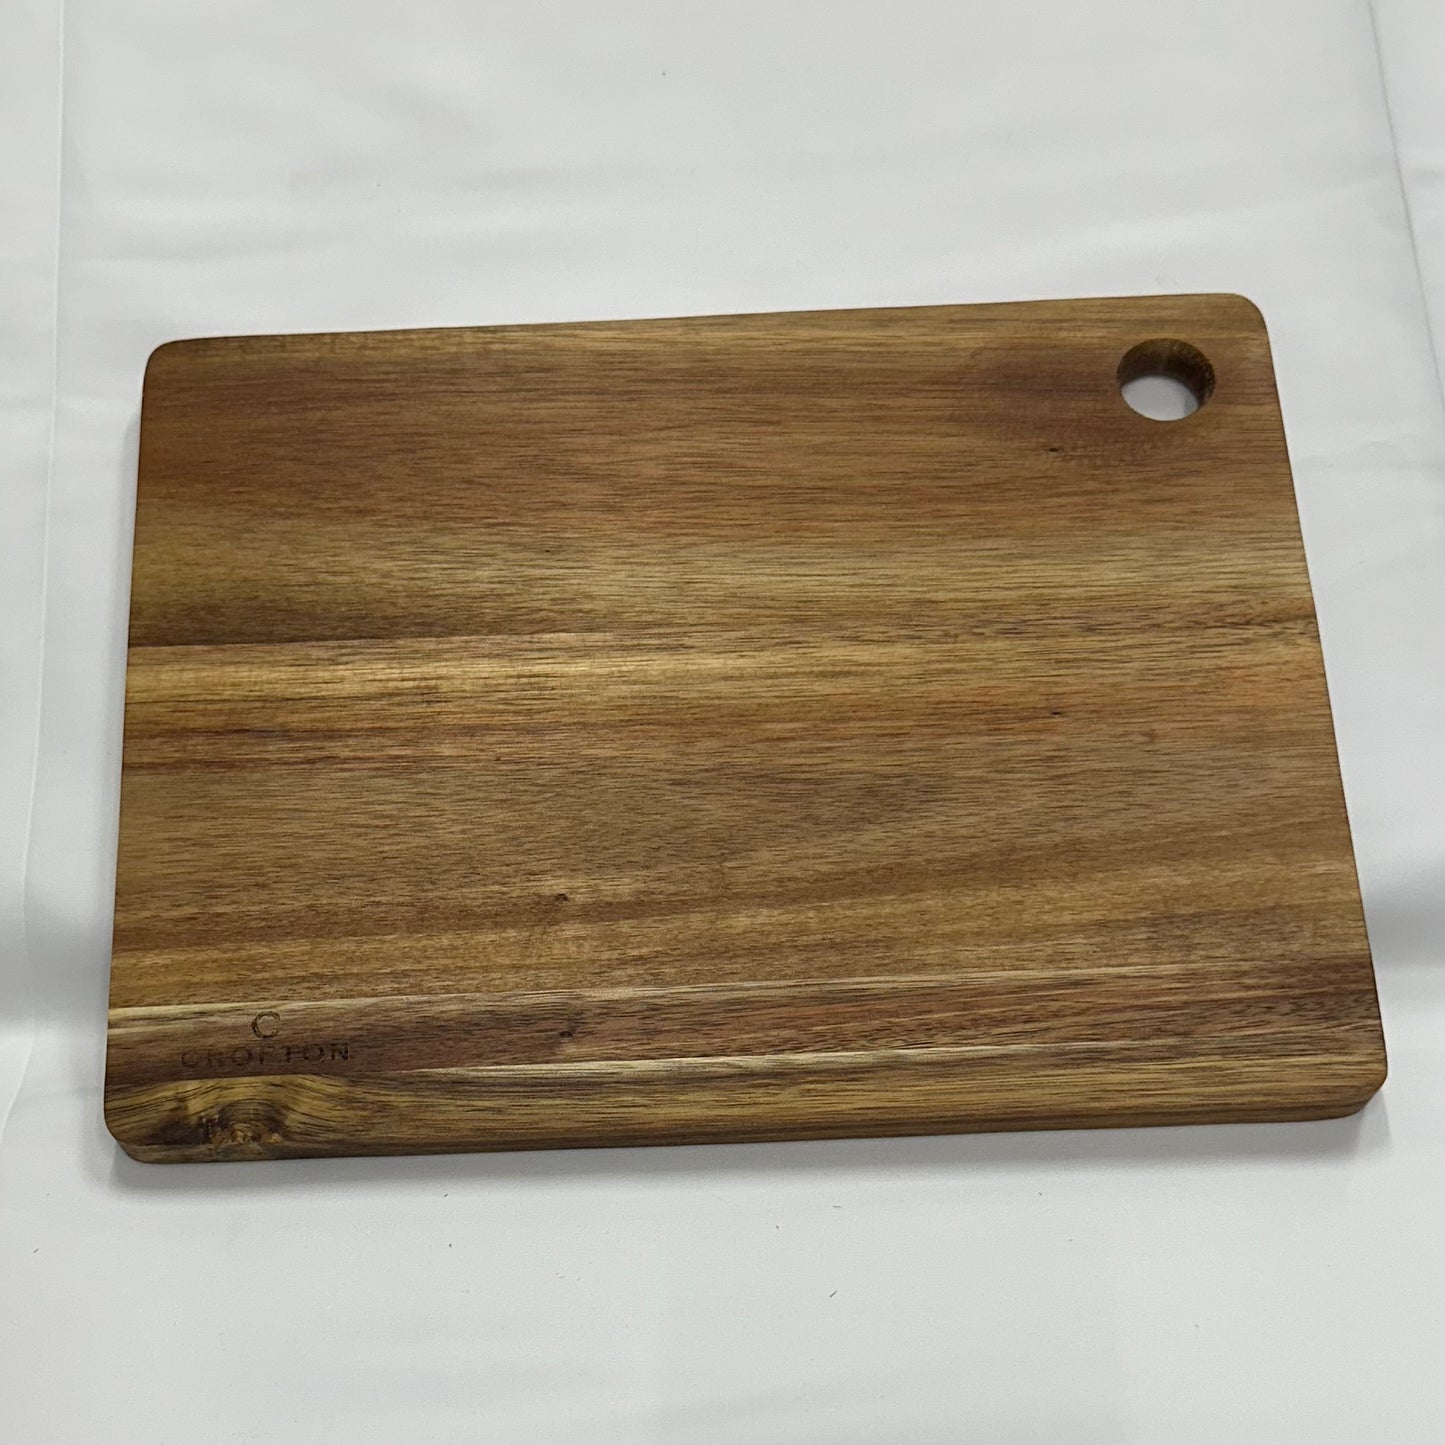 12” x 9” Acacia Small Chopping Board